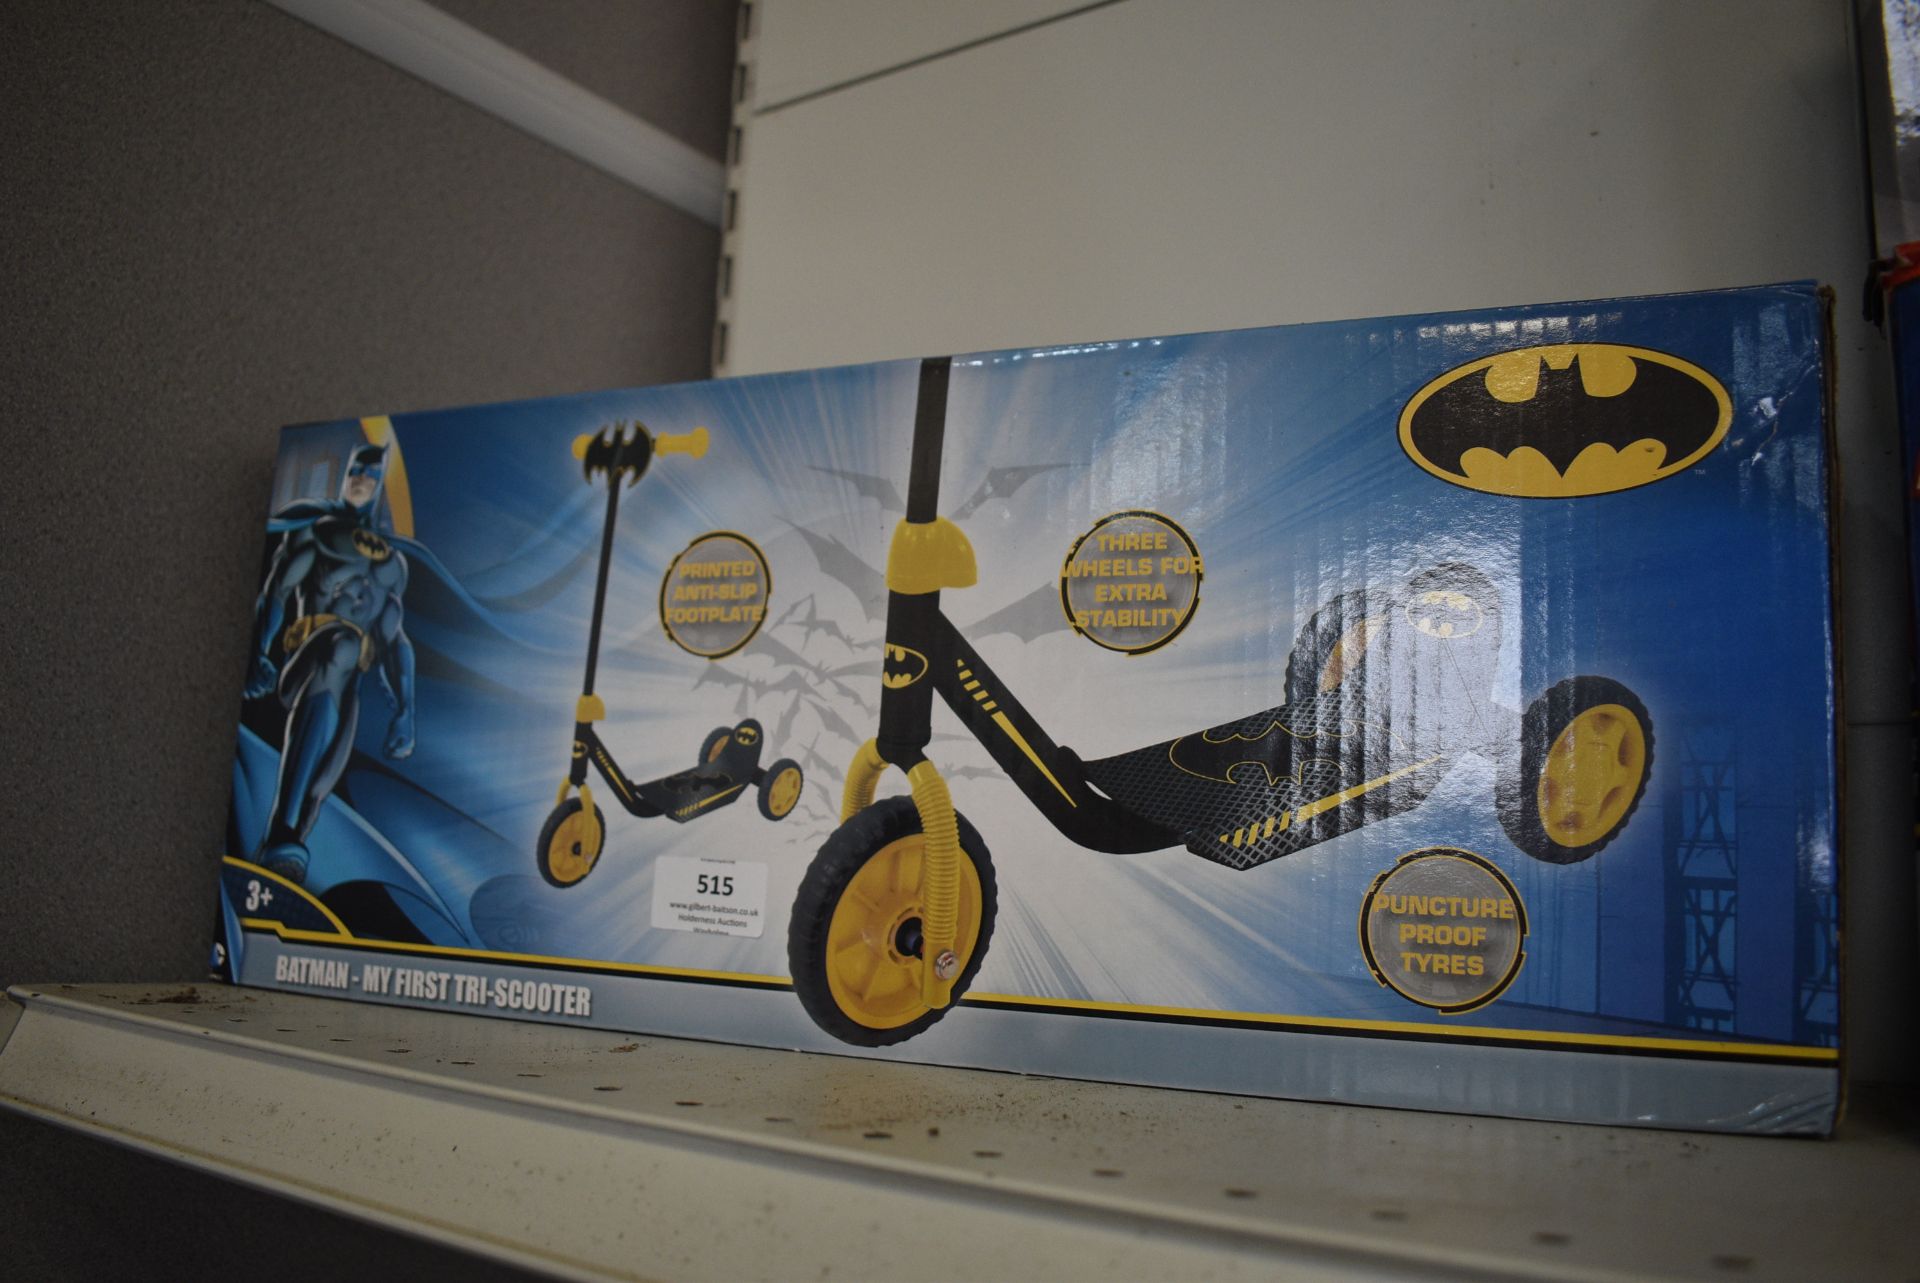 Batman Tri-Scooter - Image 2 of 4